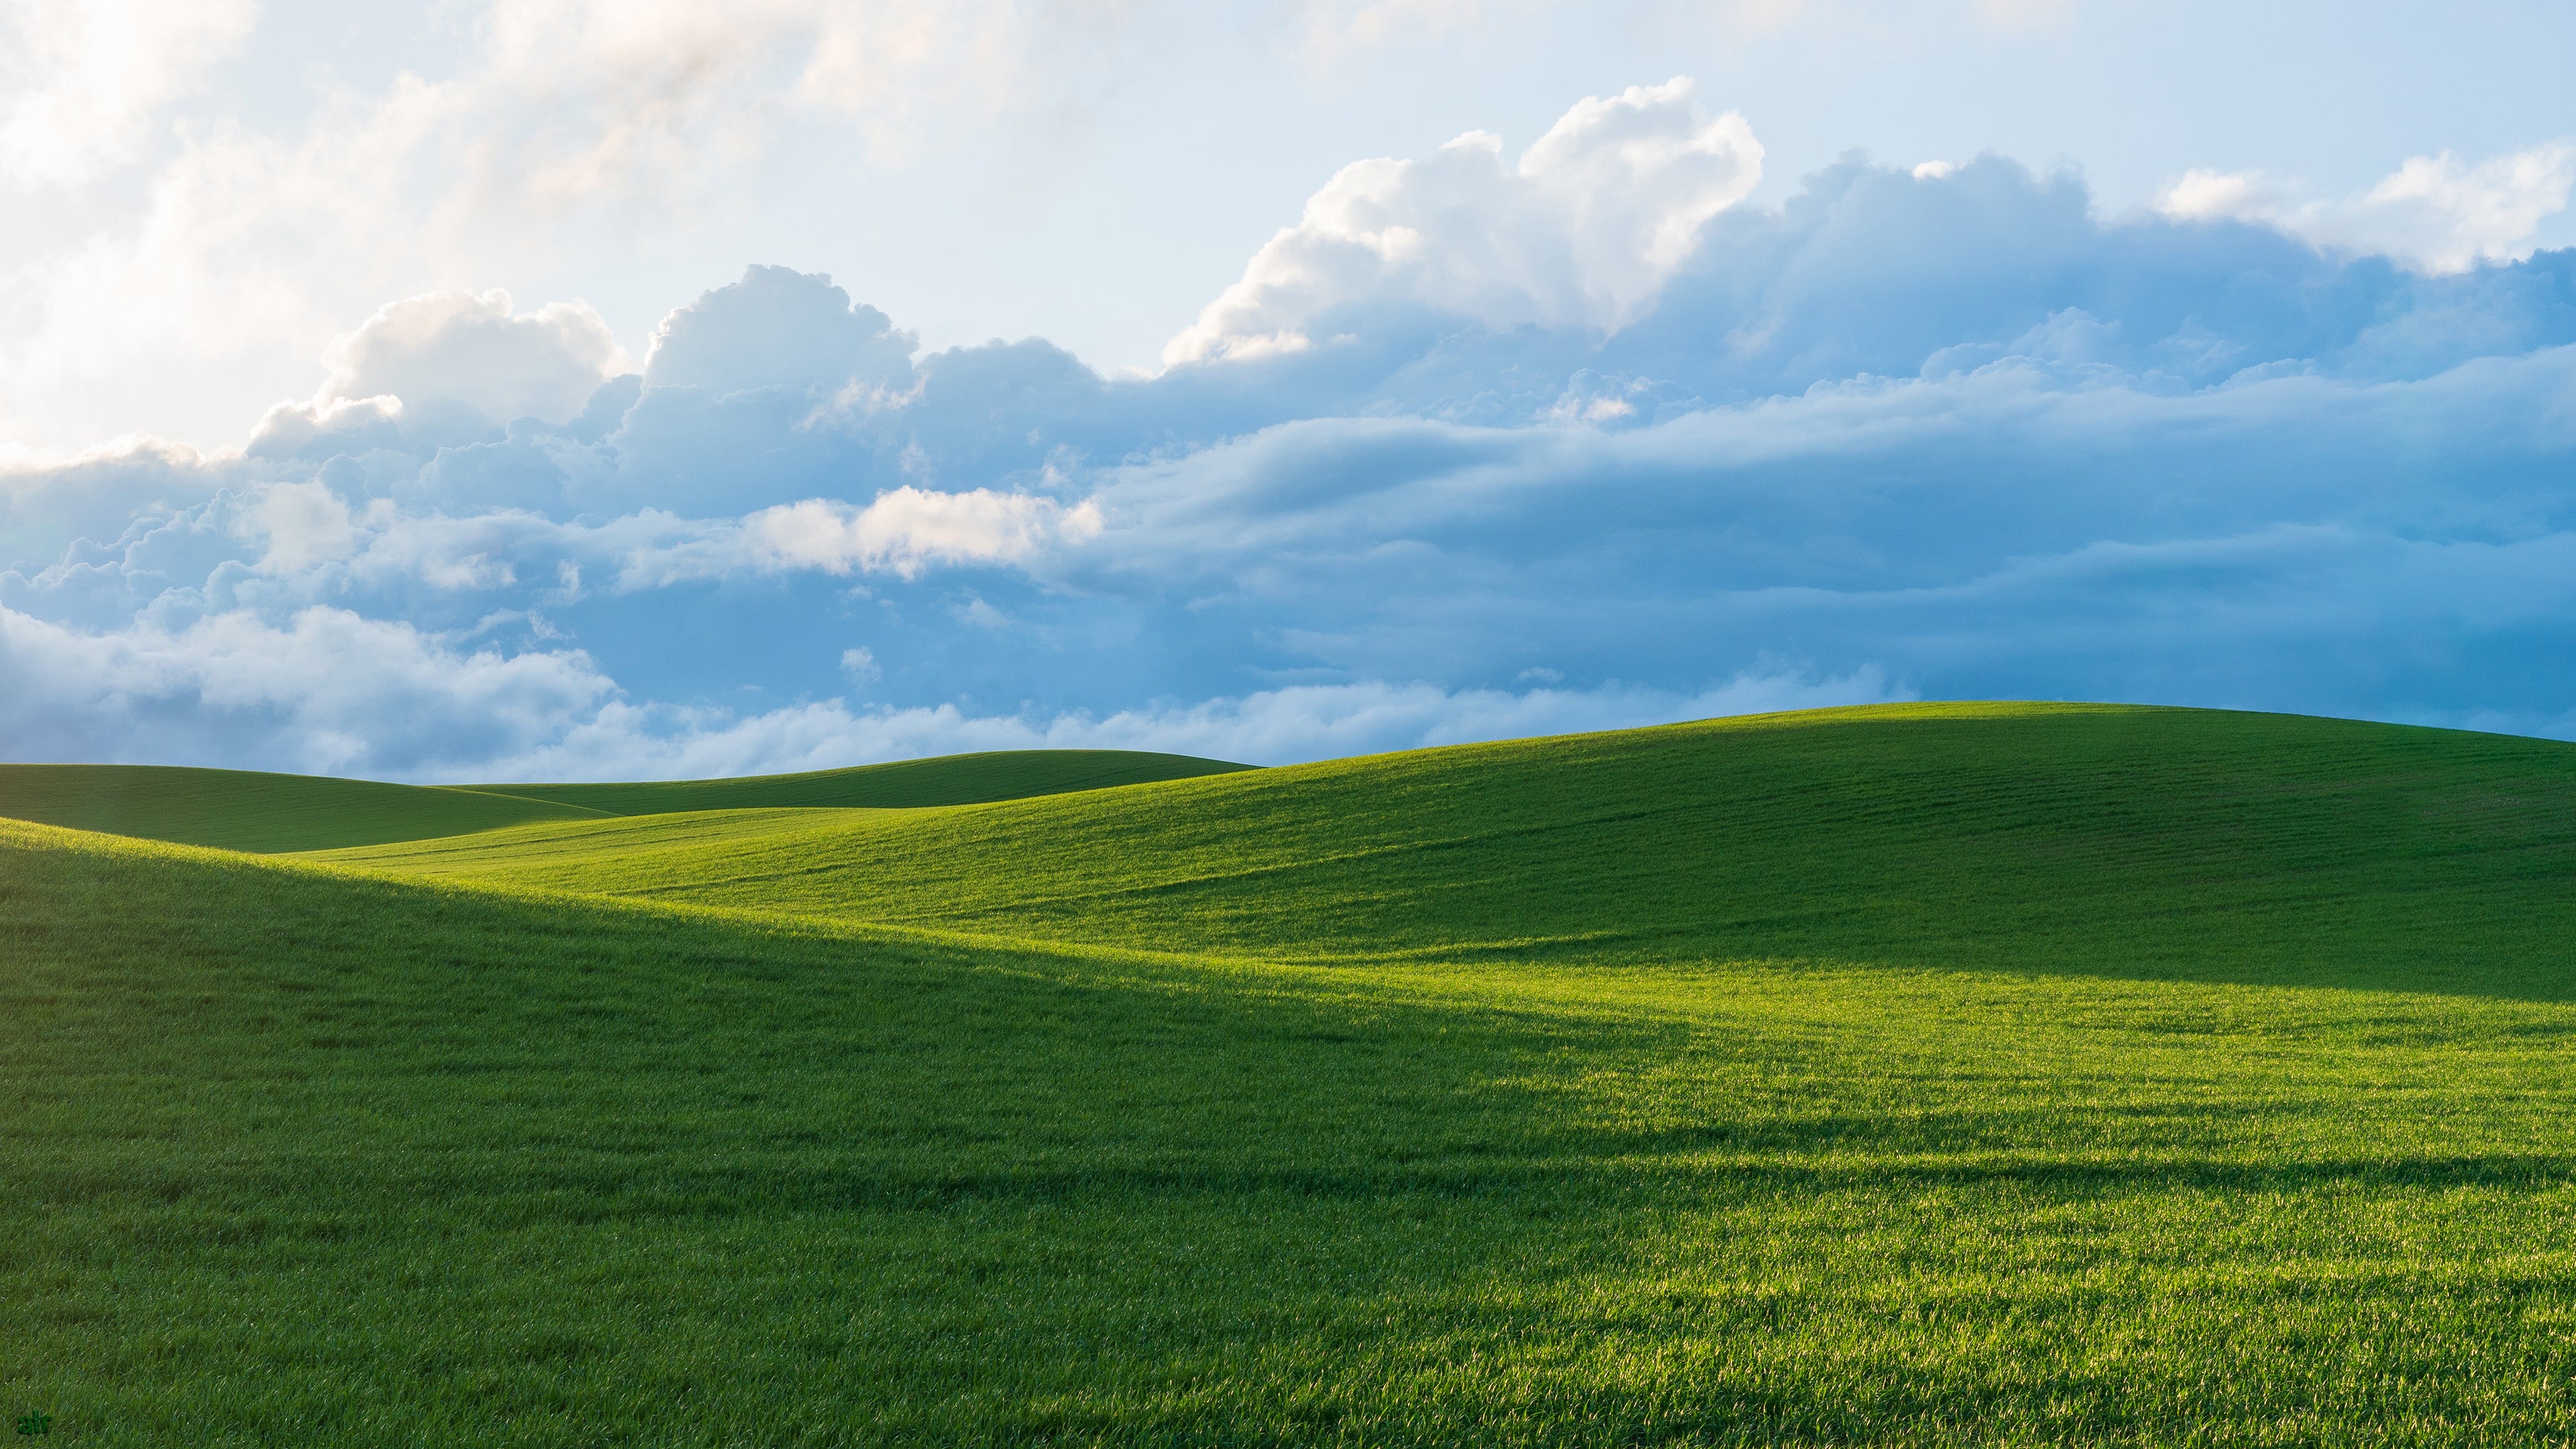 General 3840x2160 field landscape nature clouds sky hills Windows XP Microsoft bliss California USA